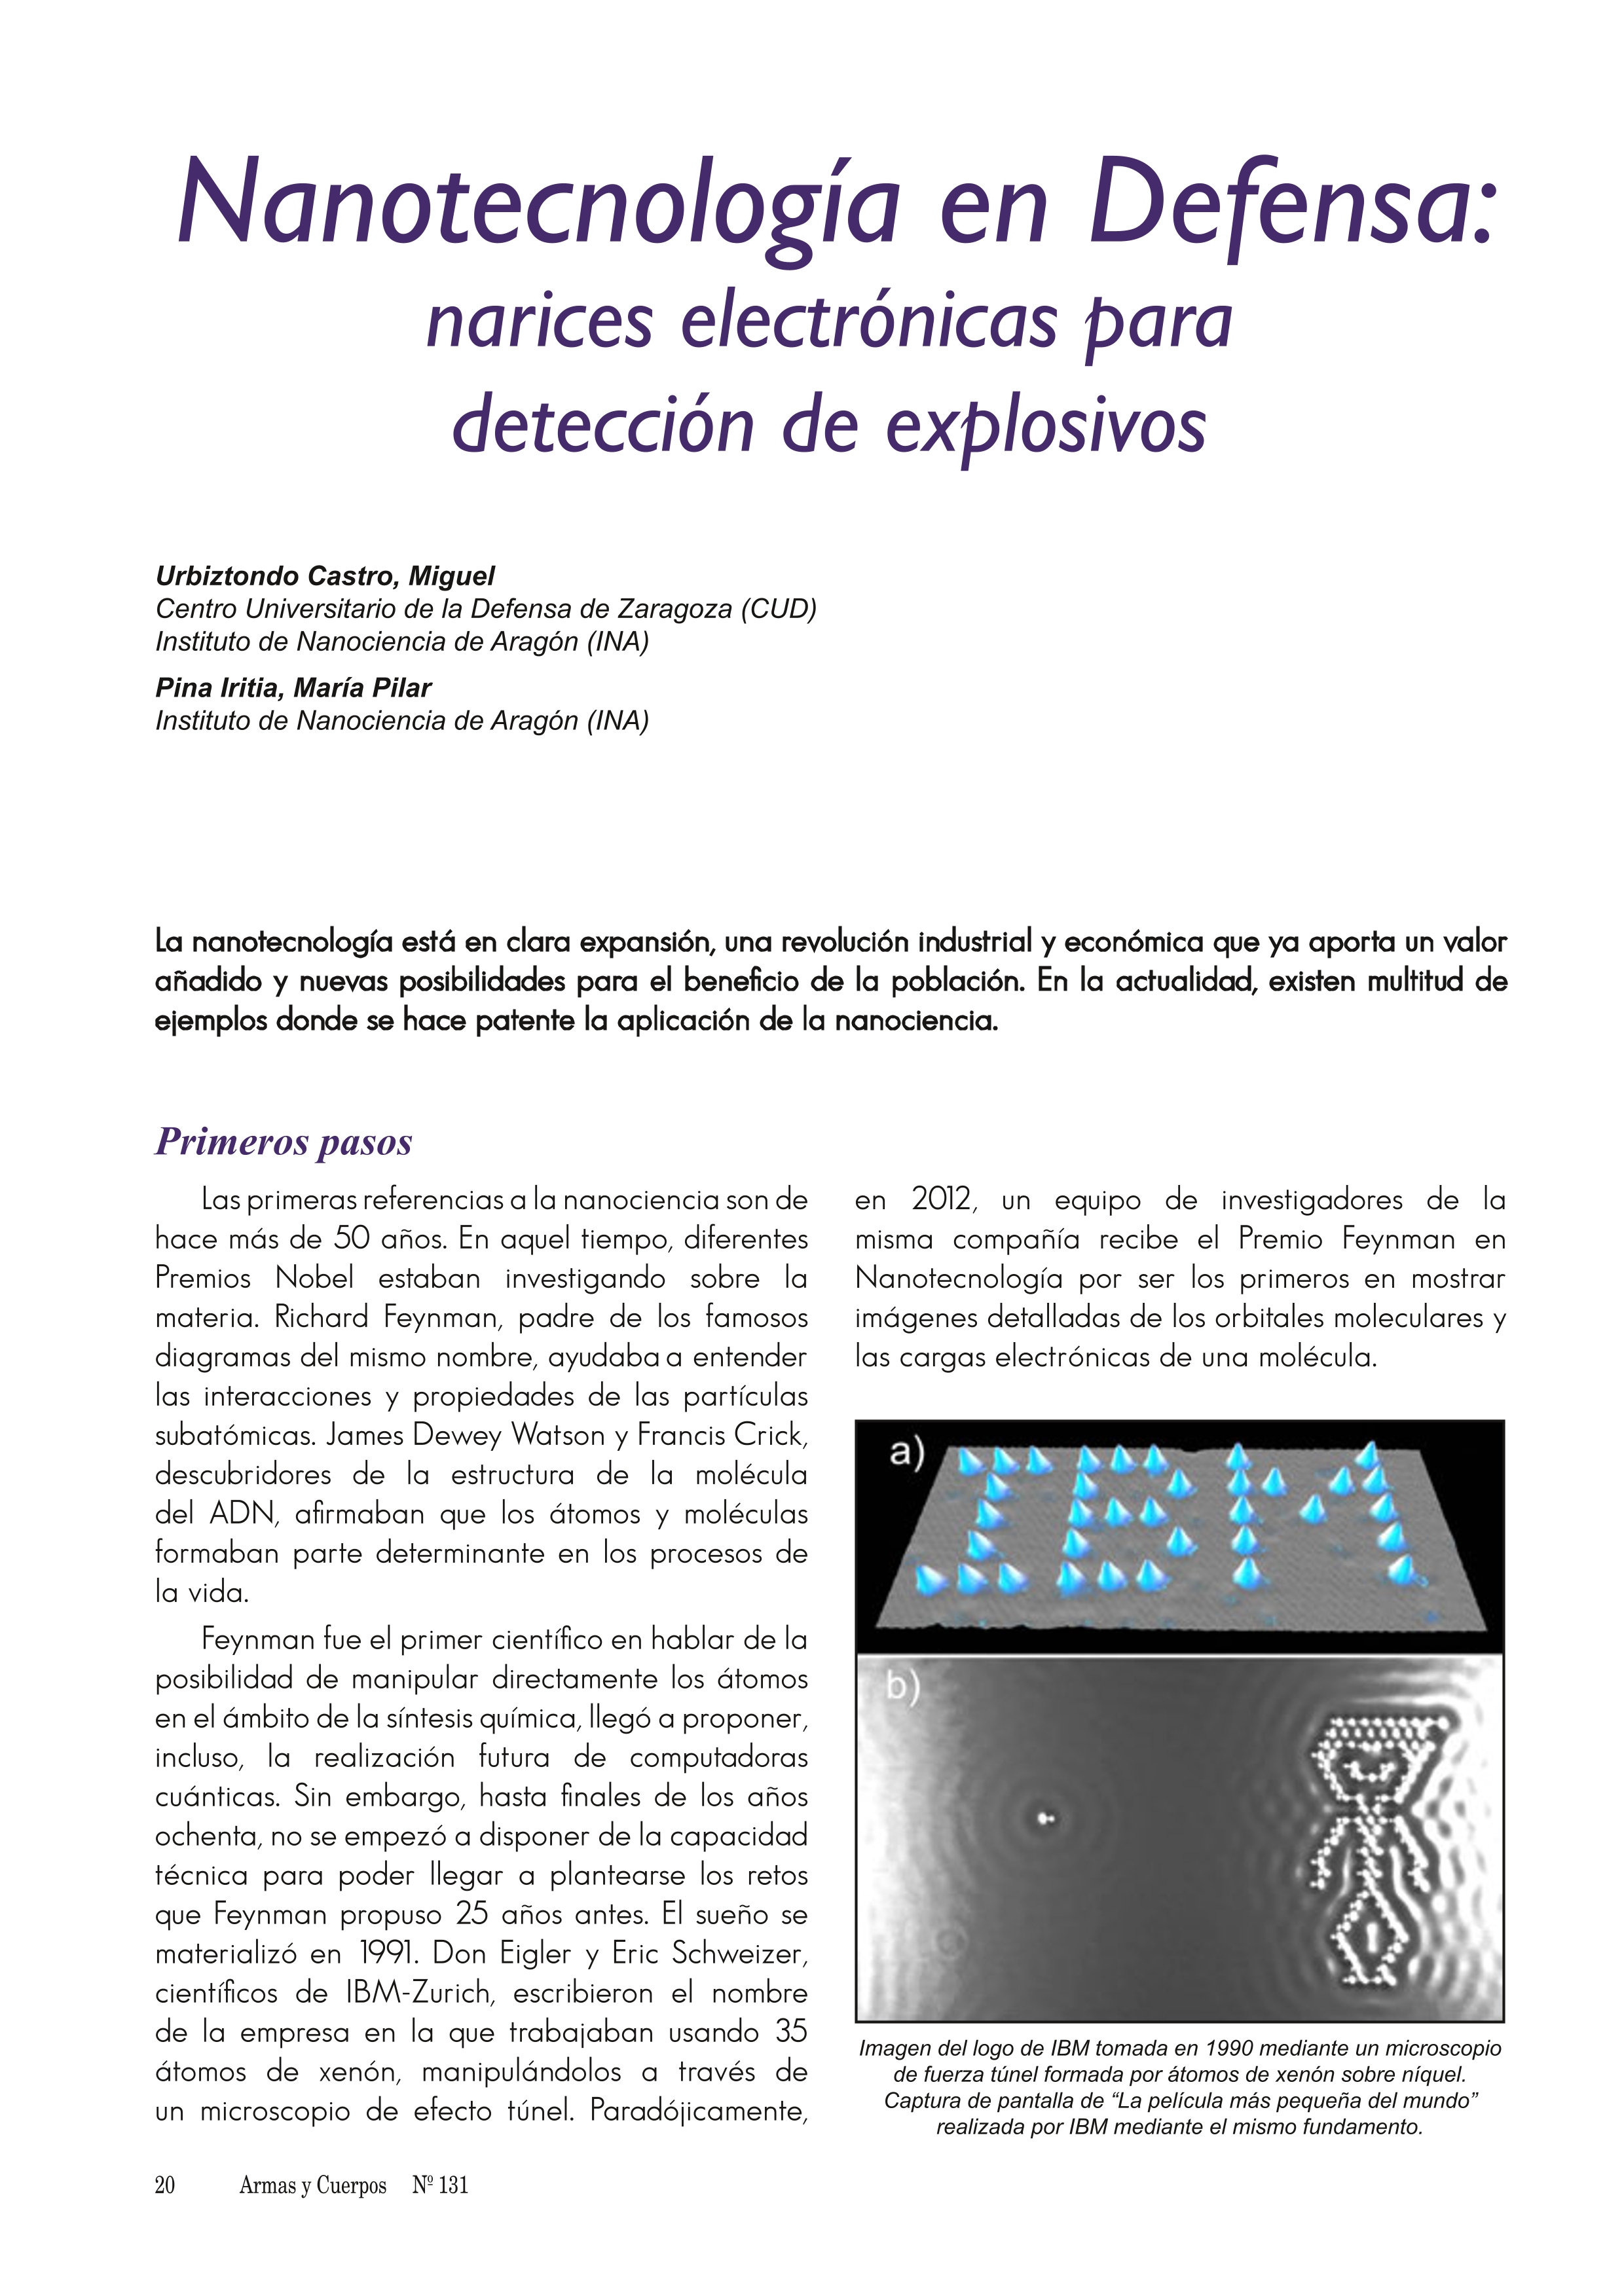 Nanotecnología en Defensa: narices electrónicas para detección de explosivos